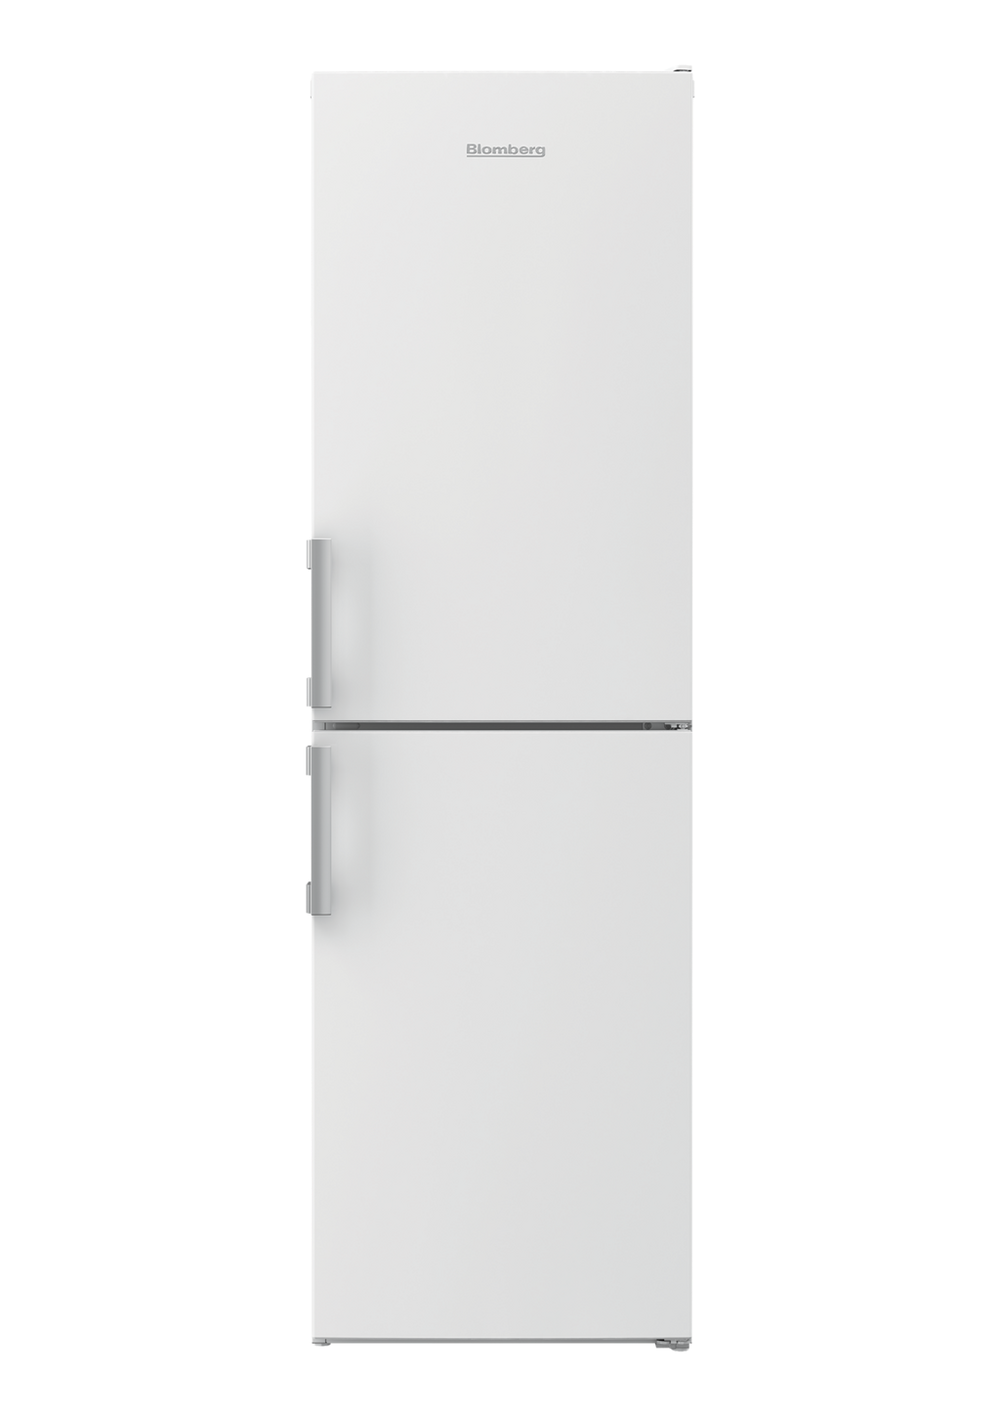 LG GBF61BLHEN 59.5cm 70/30 Freestanding Frost Free Fridge Freezer